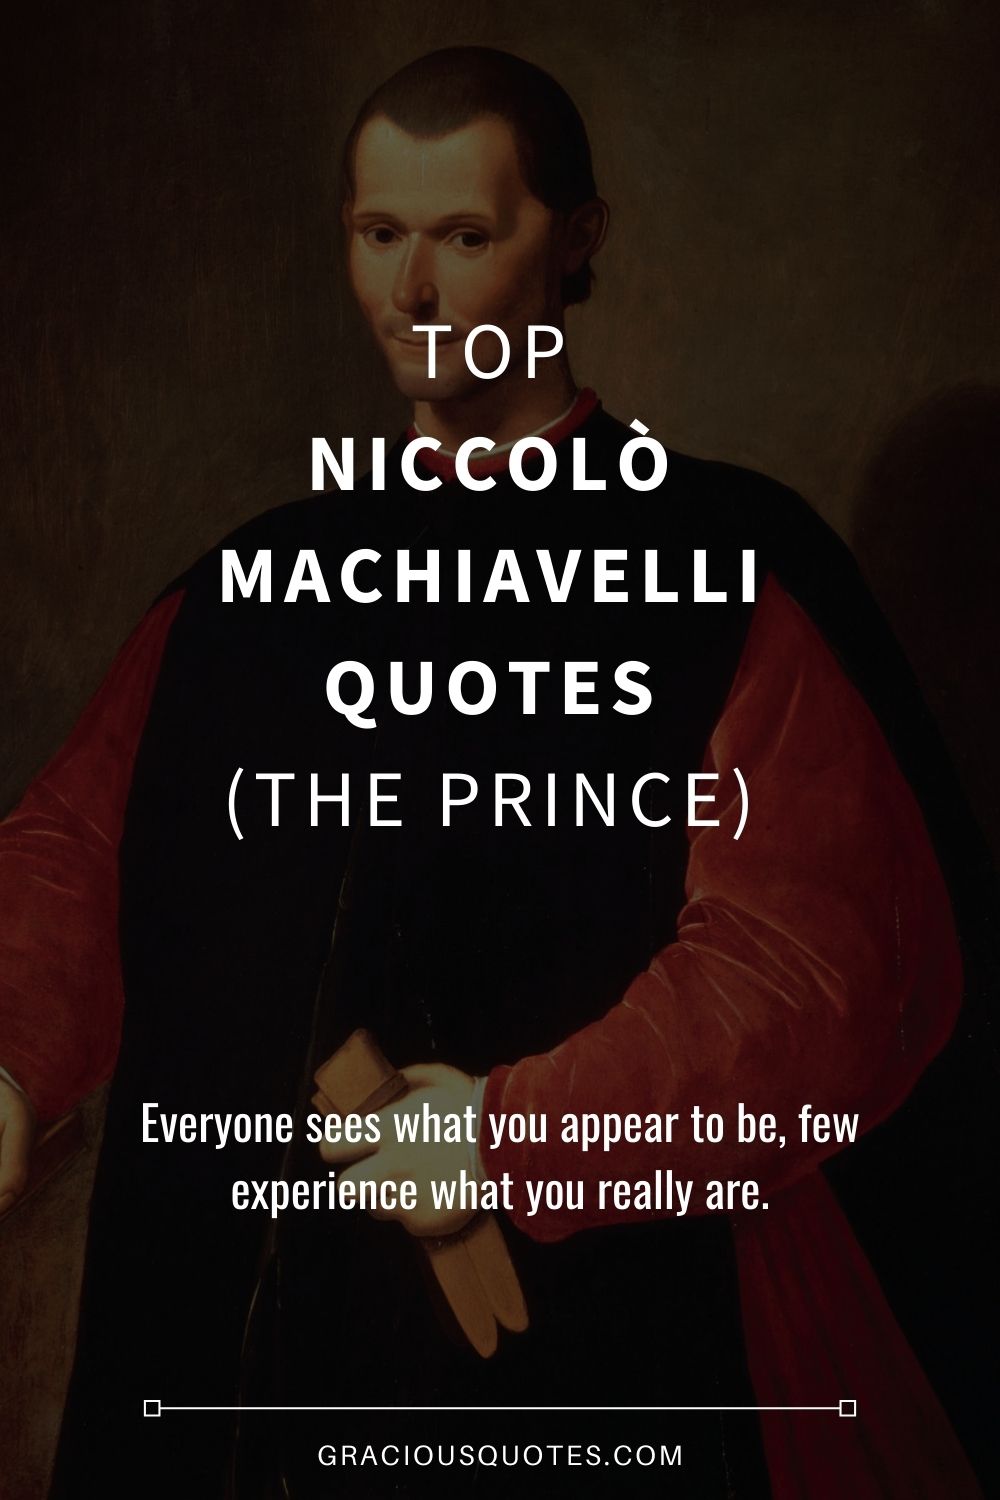 Top Niccolò Machiavelli Quotes (THE PRINCE) - Gracious Quotes